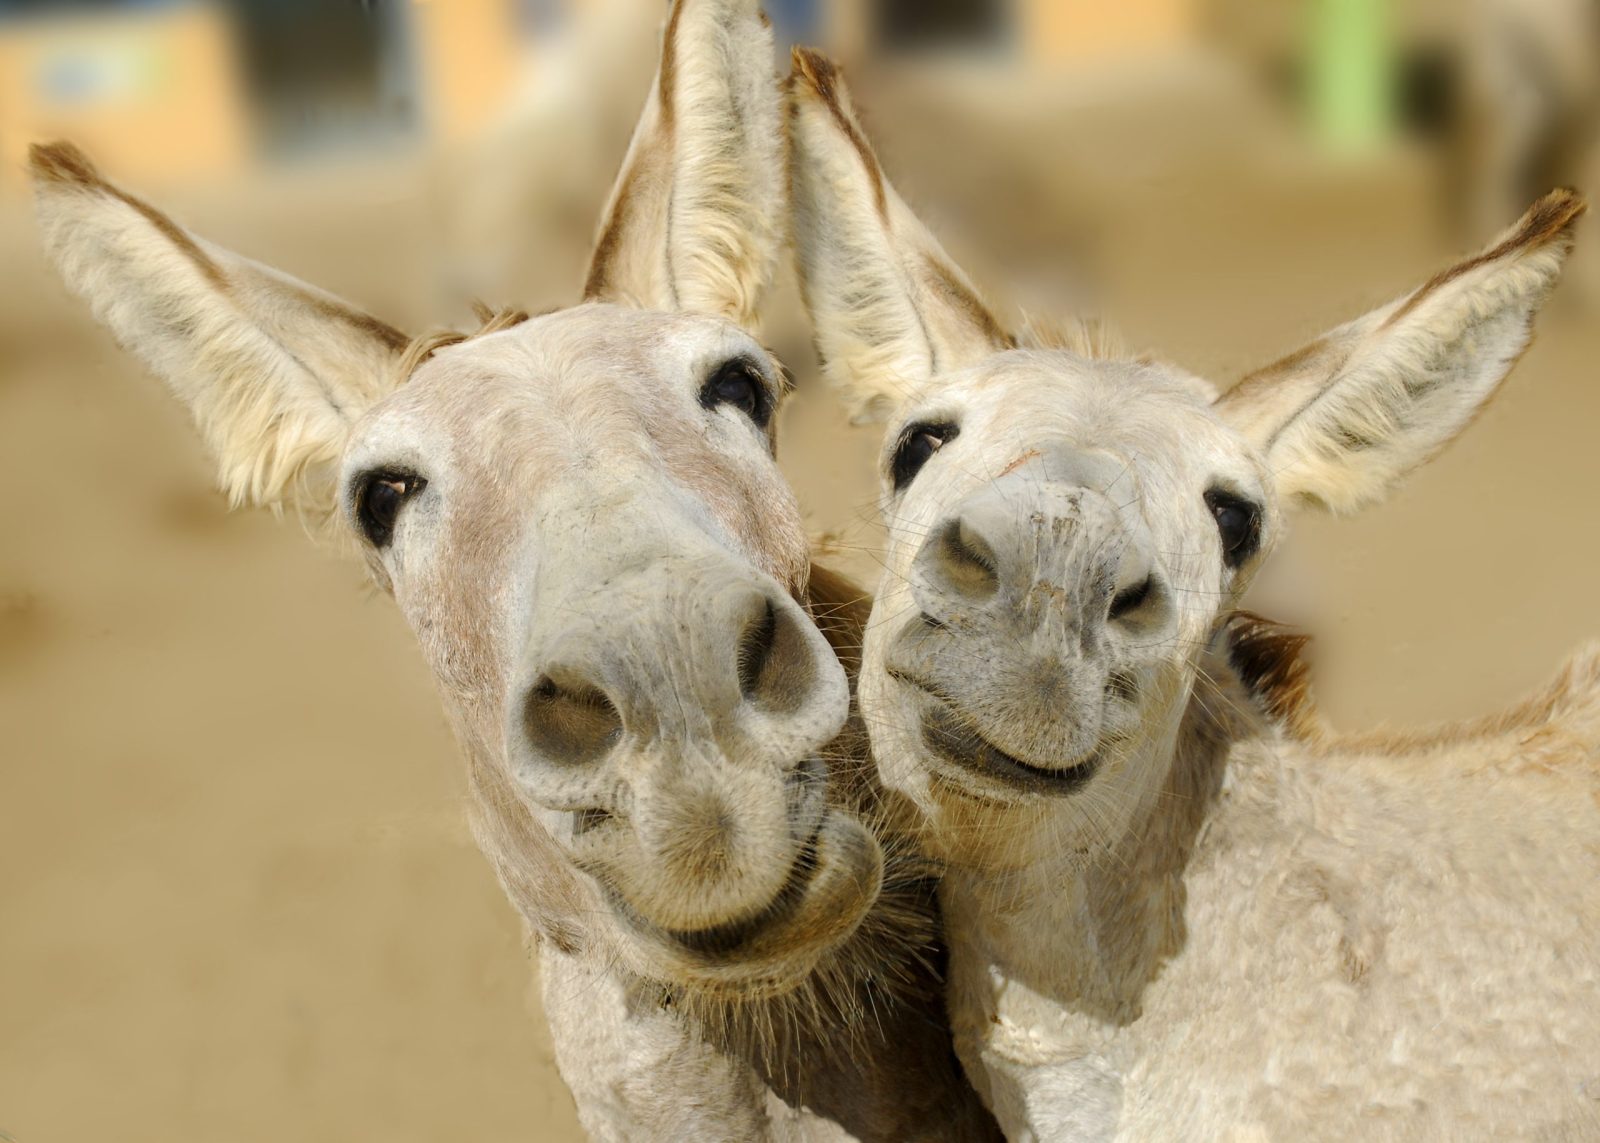 Two donkeys smiling together